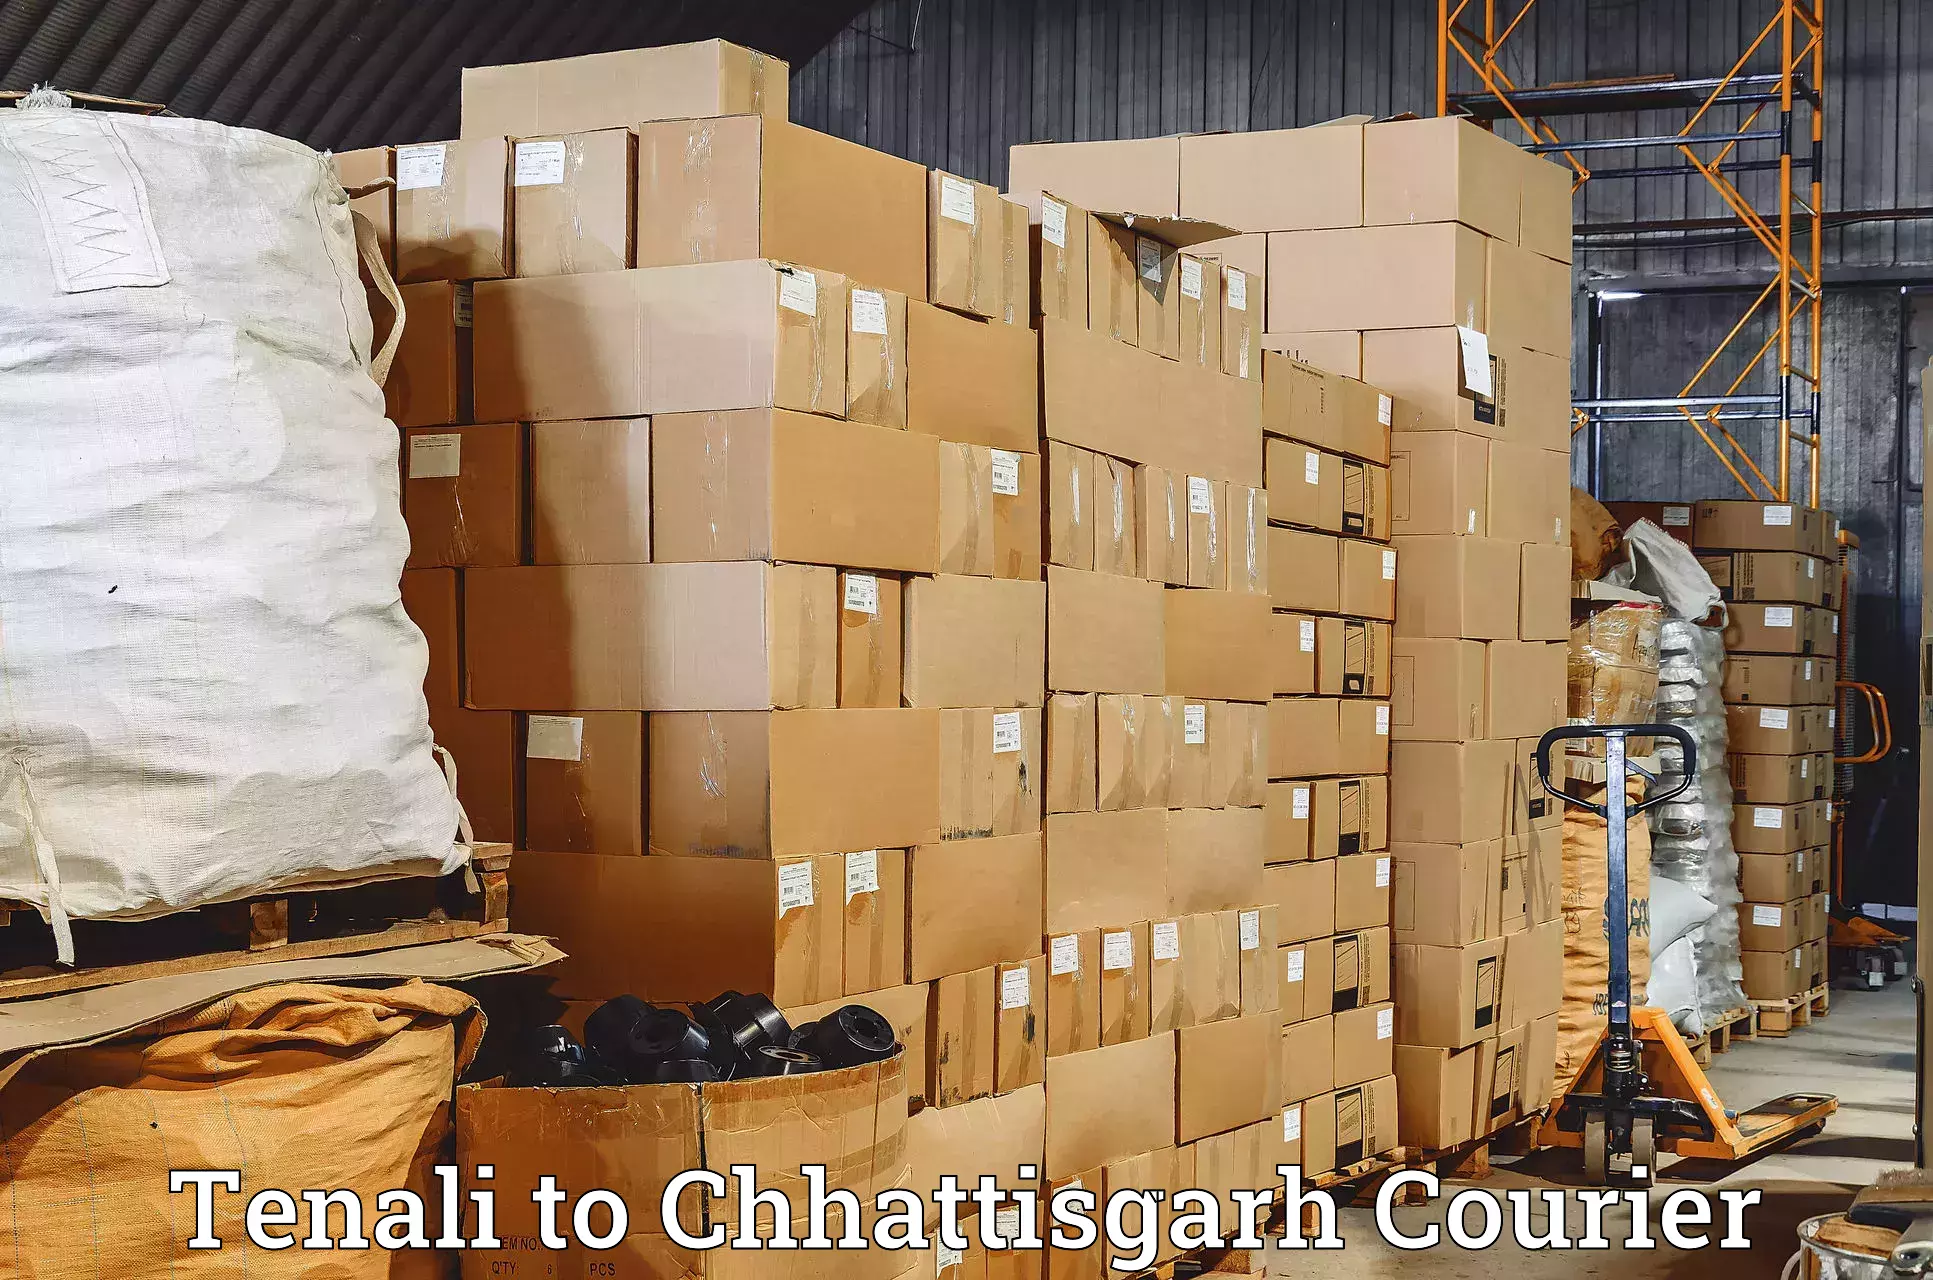 Digital courier platforms Tenali to Patna Chhattisgarh